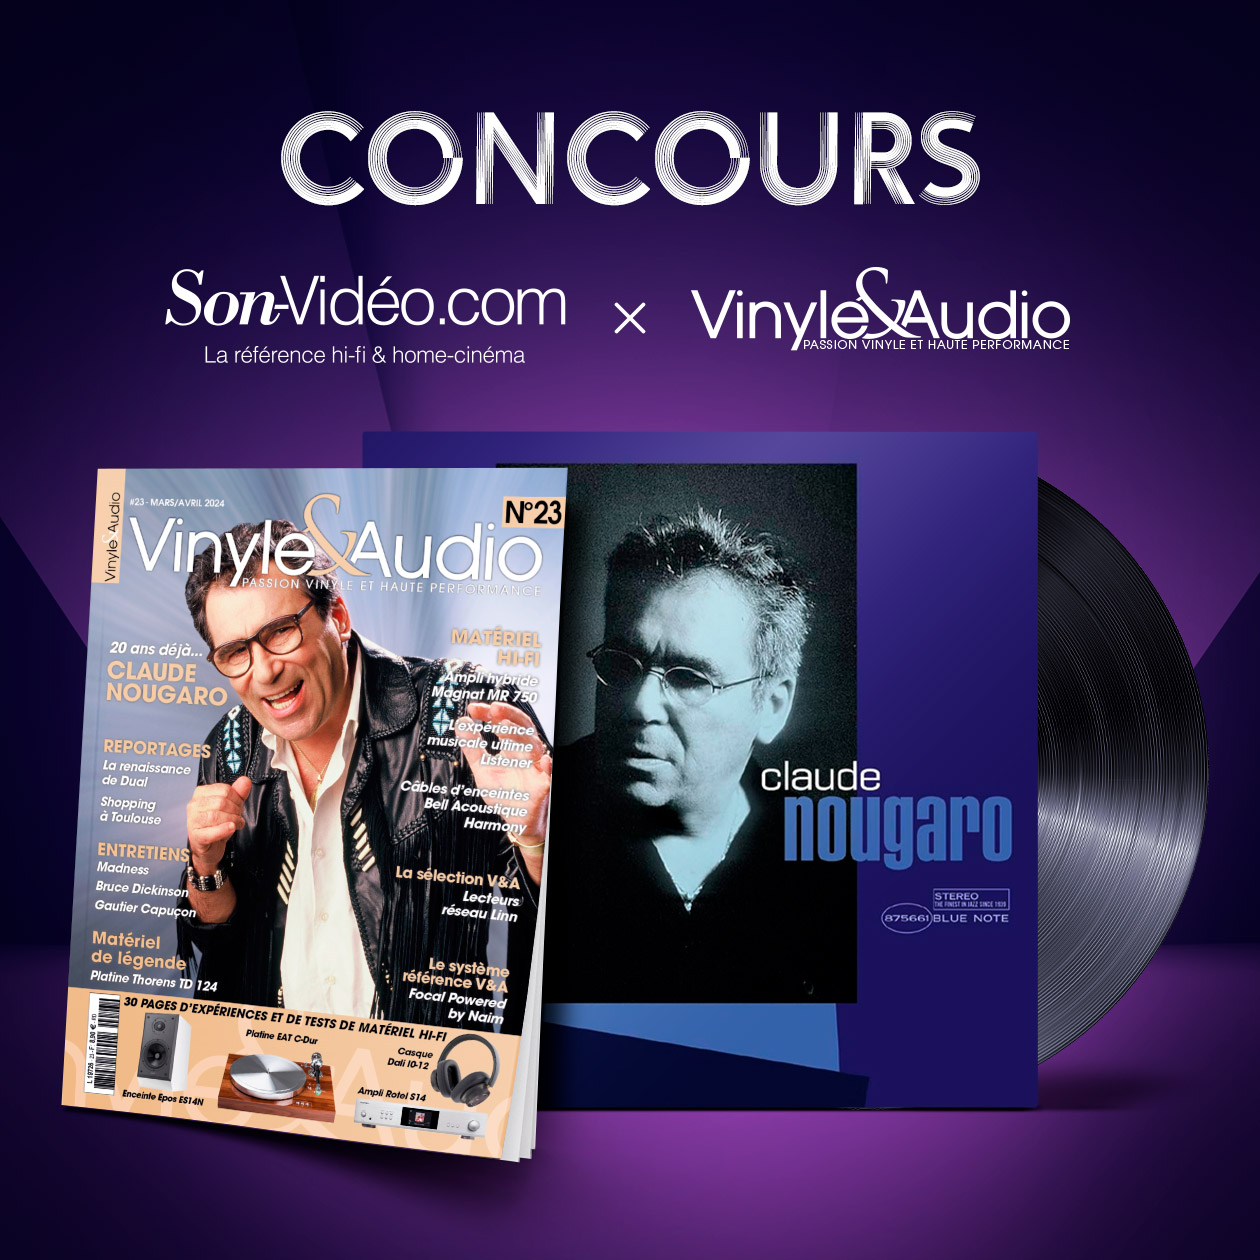 Concours Nougaro - Vinyle & Audio x Son-Video.com